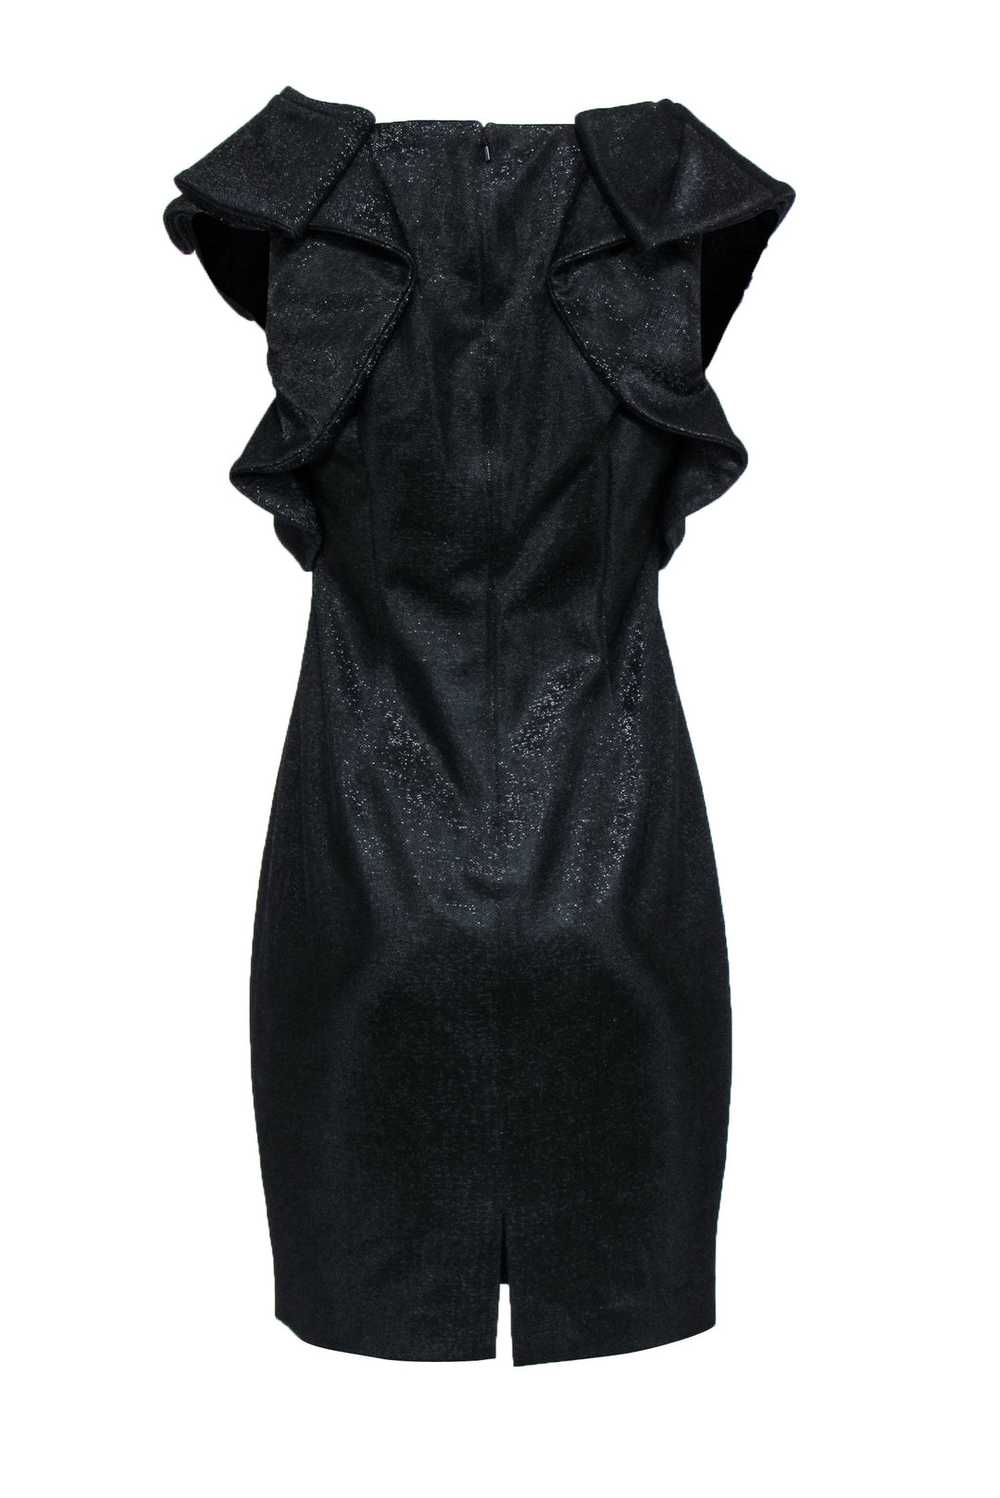 Badgley Mischka - Black Metallic Dress w/ Large R… - image 3